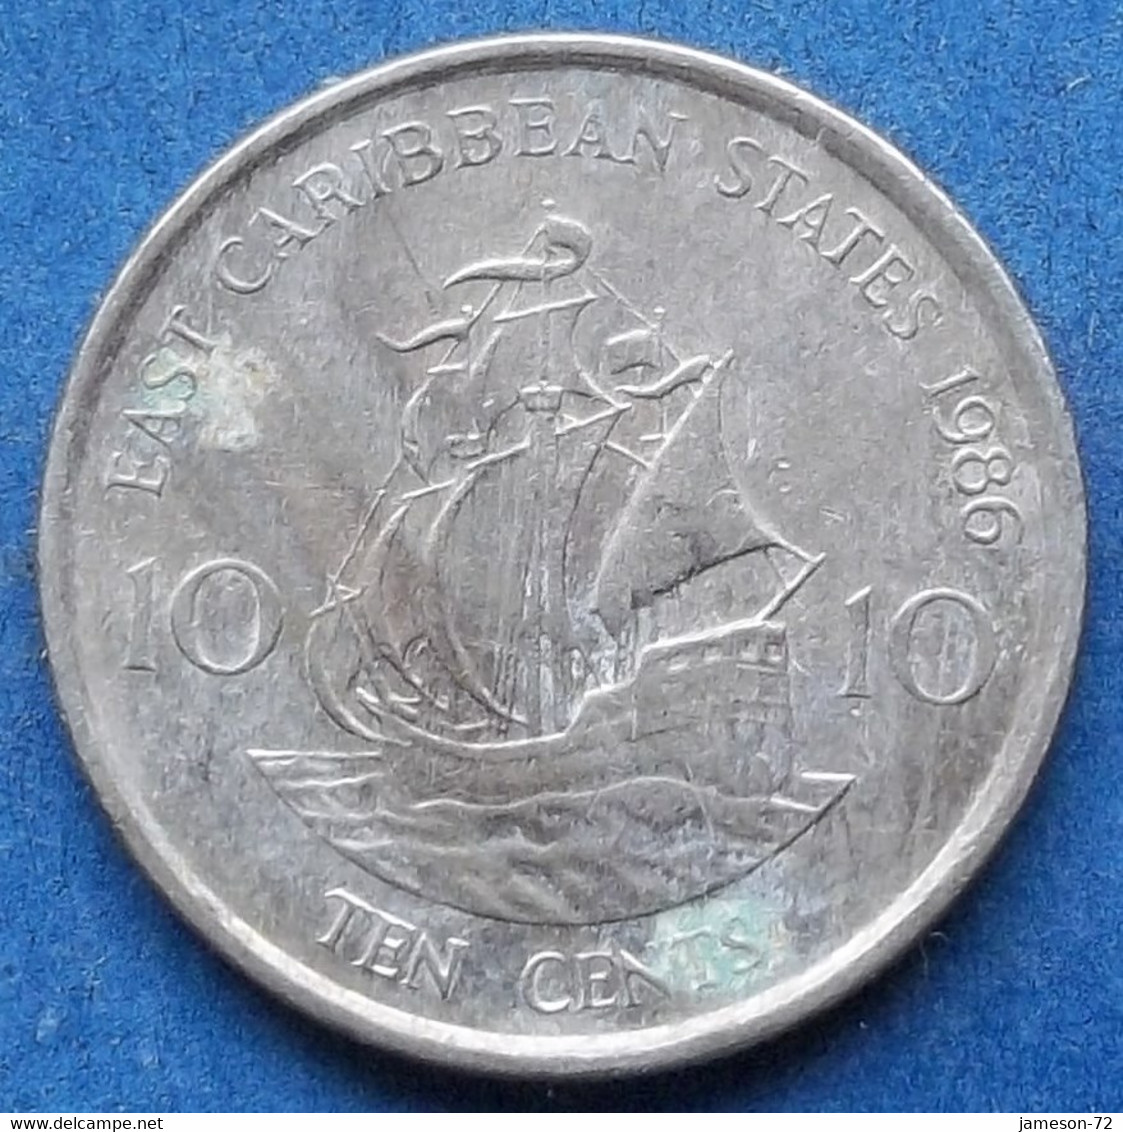 EAST CARIBBEAN STATES - 10 Cents 1986 KM# 13 - Edelweiss Coins - Ostkaribischer Staaten